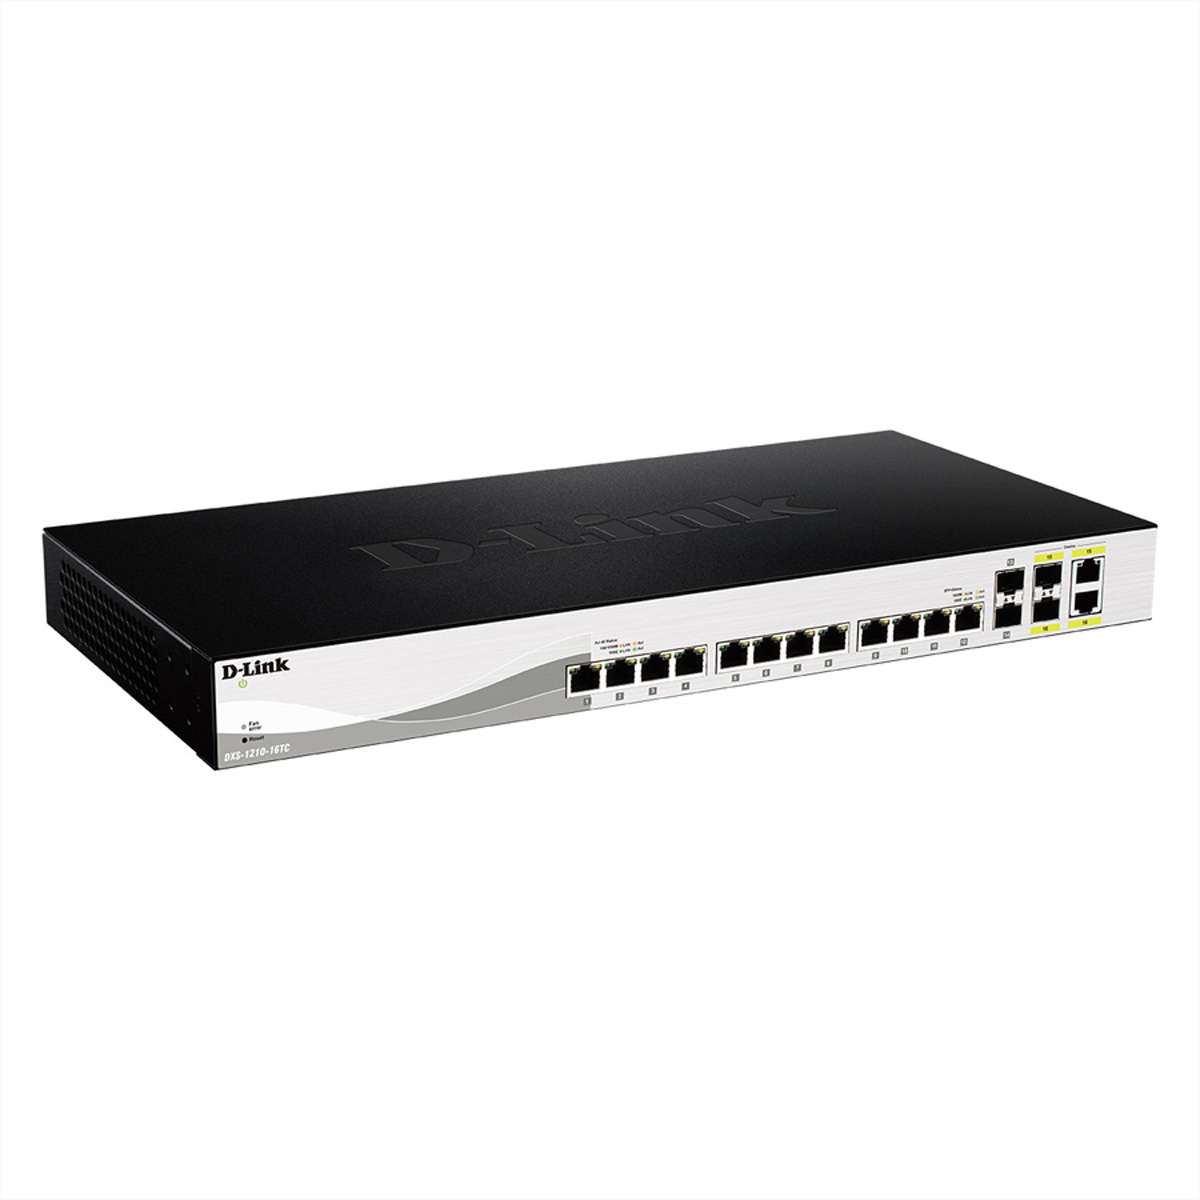 2x Combo SFP+ Ethernet Switch 2x Switch D-LINK 16-Port Smart 10G DXS-1210-16TC Gigabit Managed